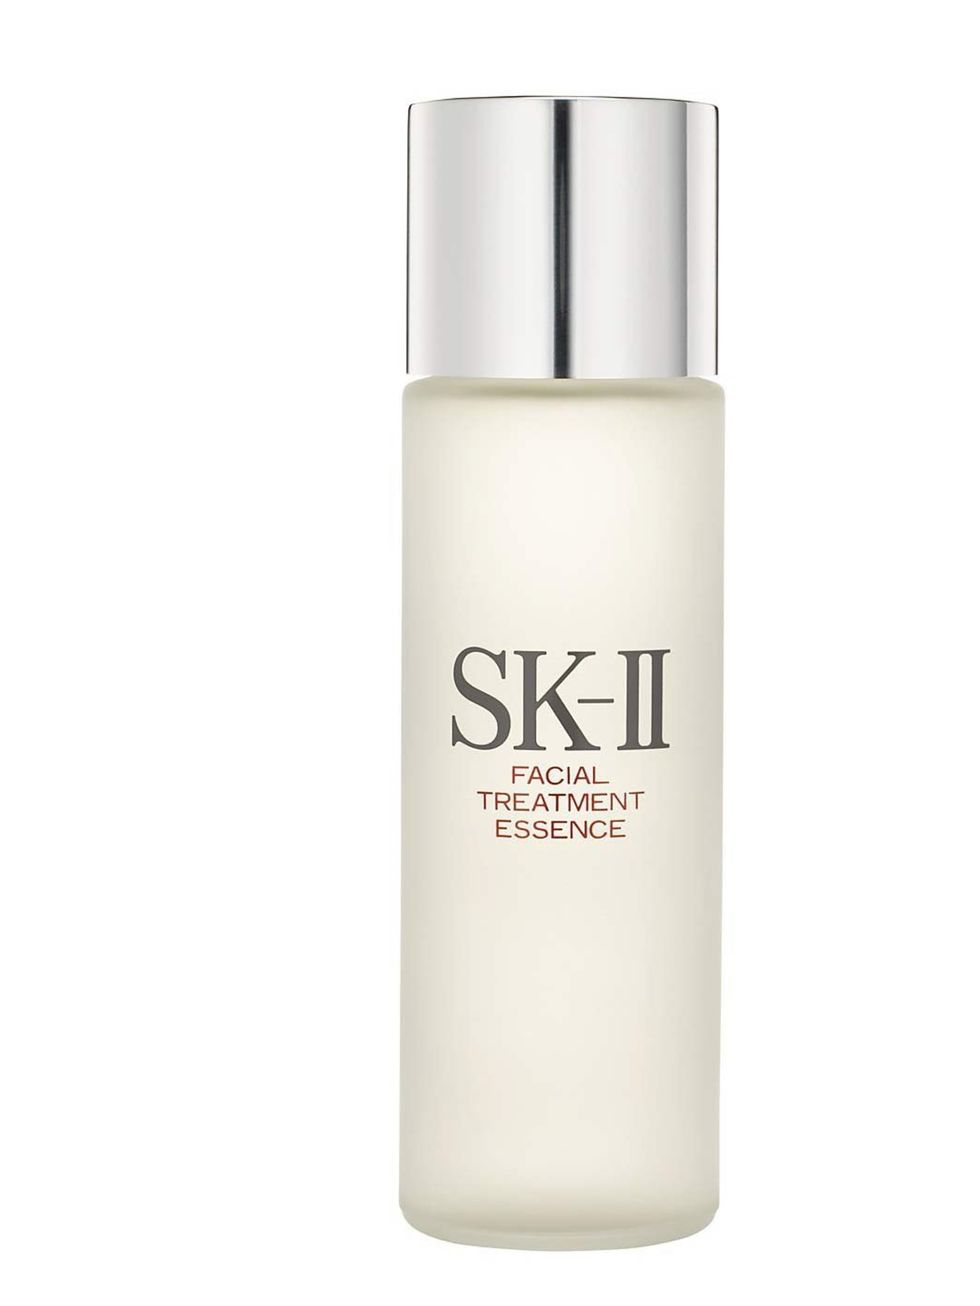 <p><a href="http://www.harrods.com/product/facial-treatment-essence-75ml-330ml/sk-ii/b12-0807-064-SKII-0001">SK-II Facial Treatment Essence, £65</a>   </p><p>This treatment essence by Cate Blanchetts go-to skincare brand, SK-II is lauded as holy water 